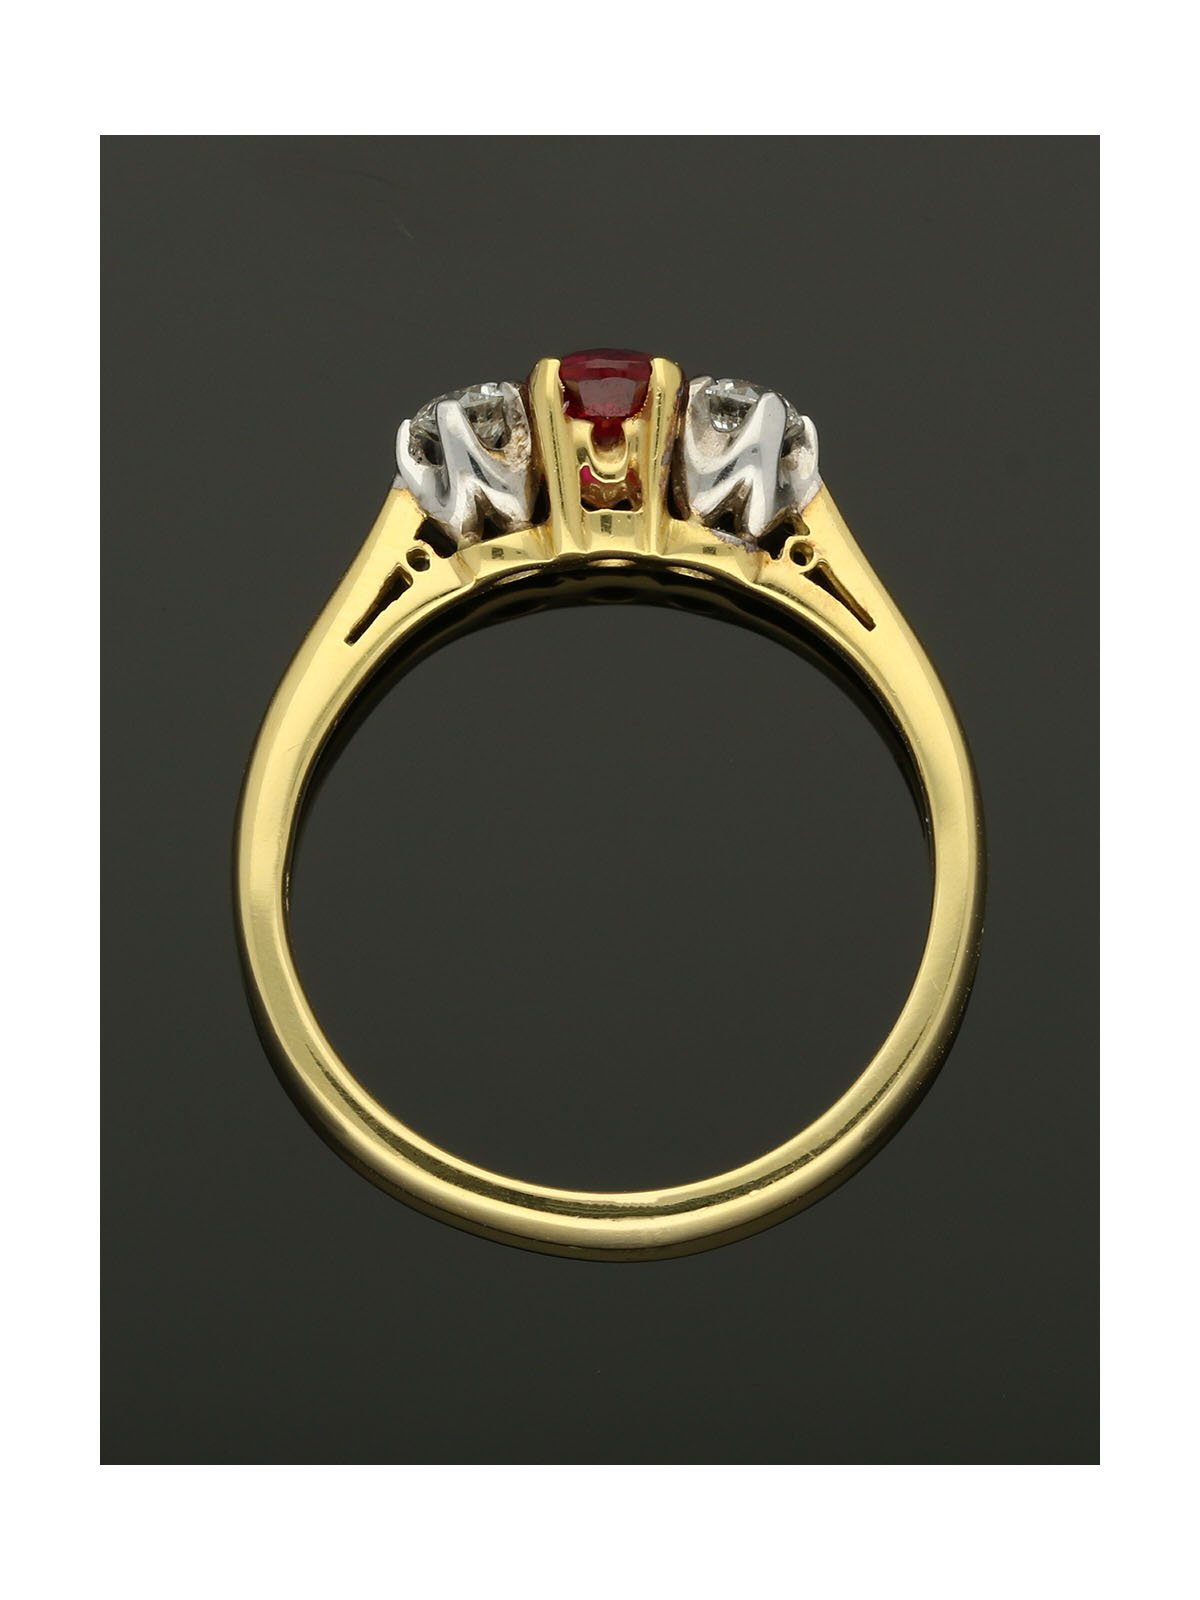 Ruby & Diamond Three Stone Ring in 18ct Yellow & White Gold